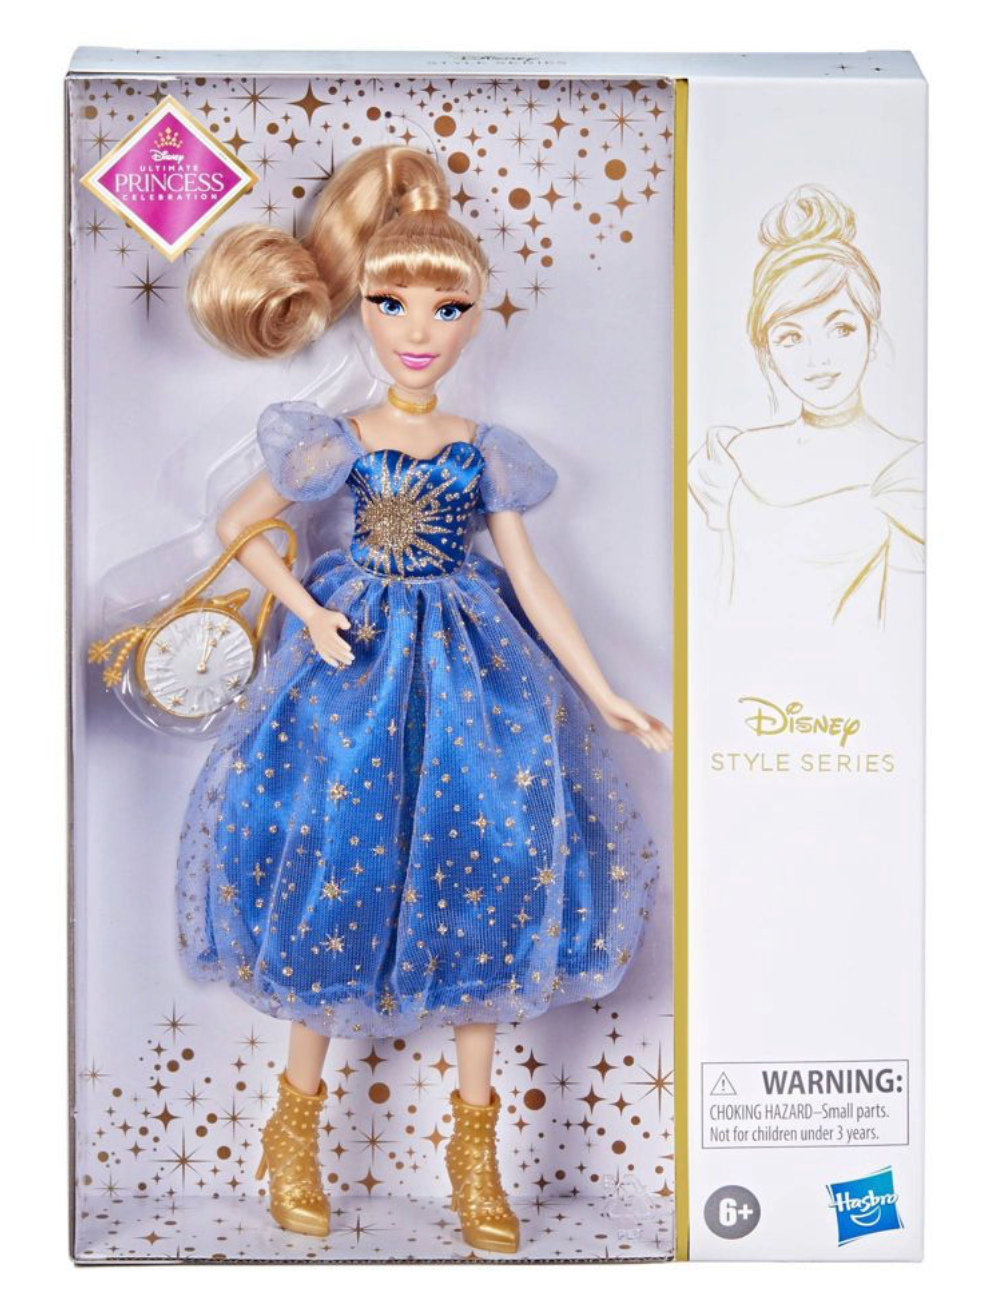 Disney Style Series Ultimate Princess Celebration Cinderella Doll Toy New w Box